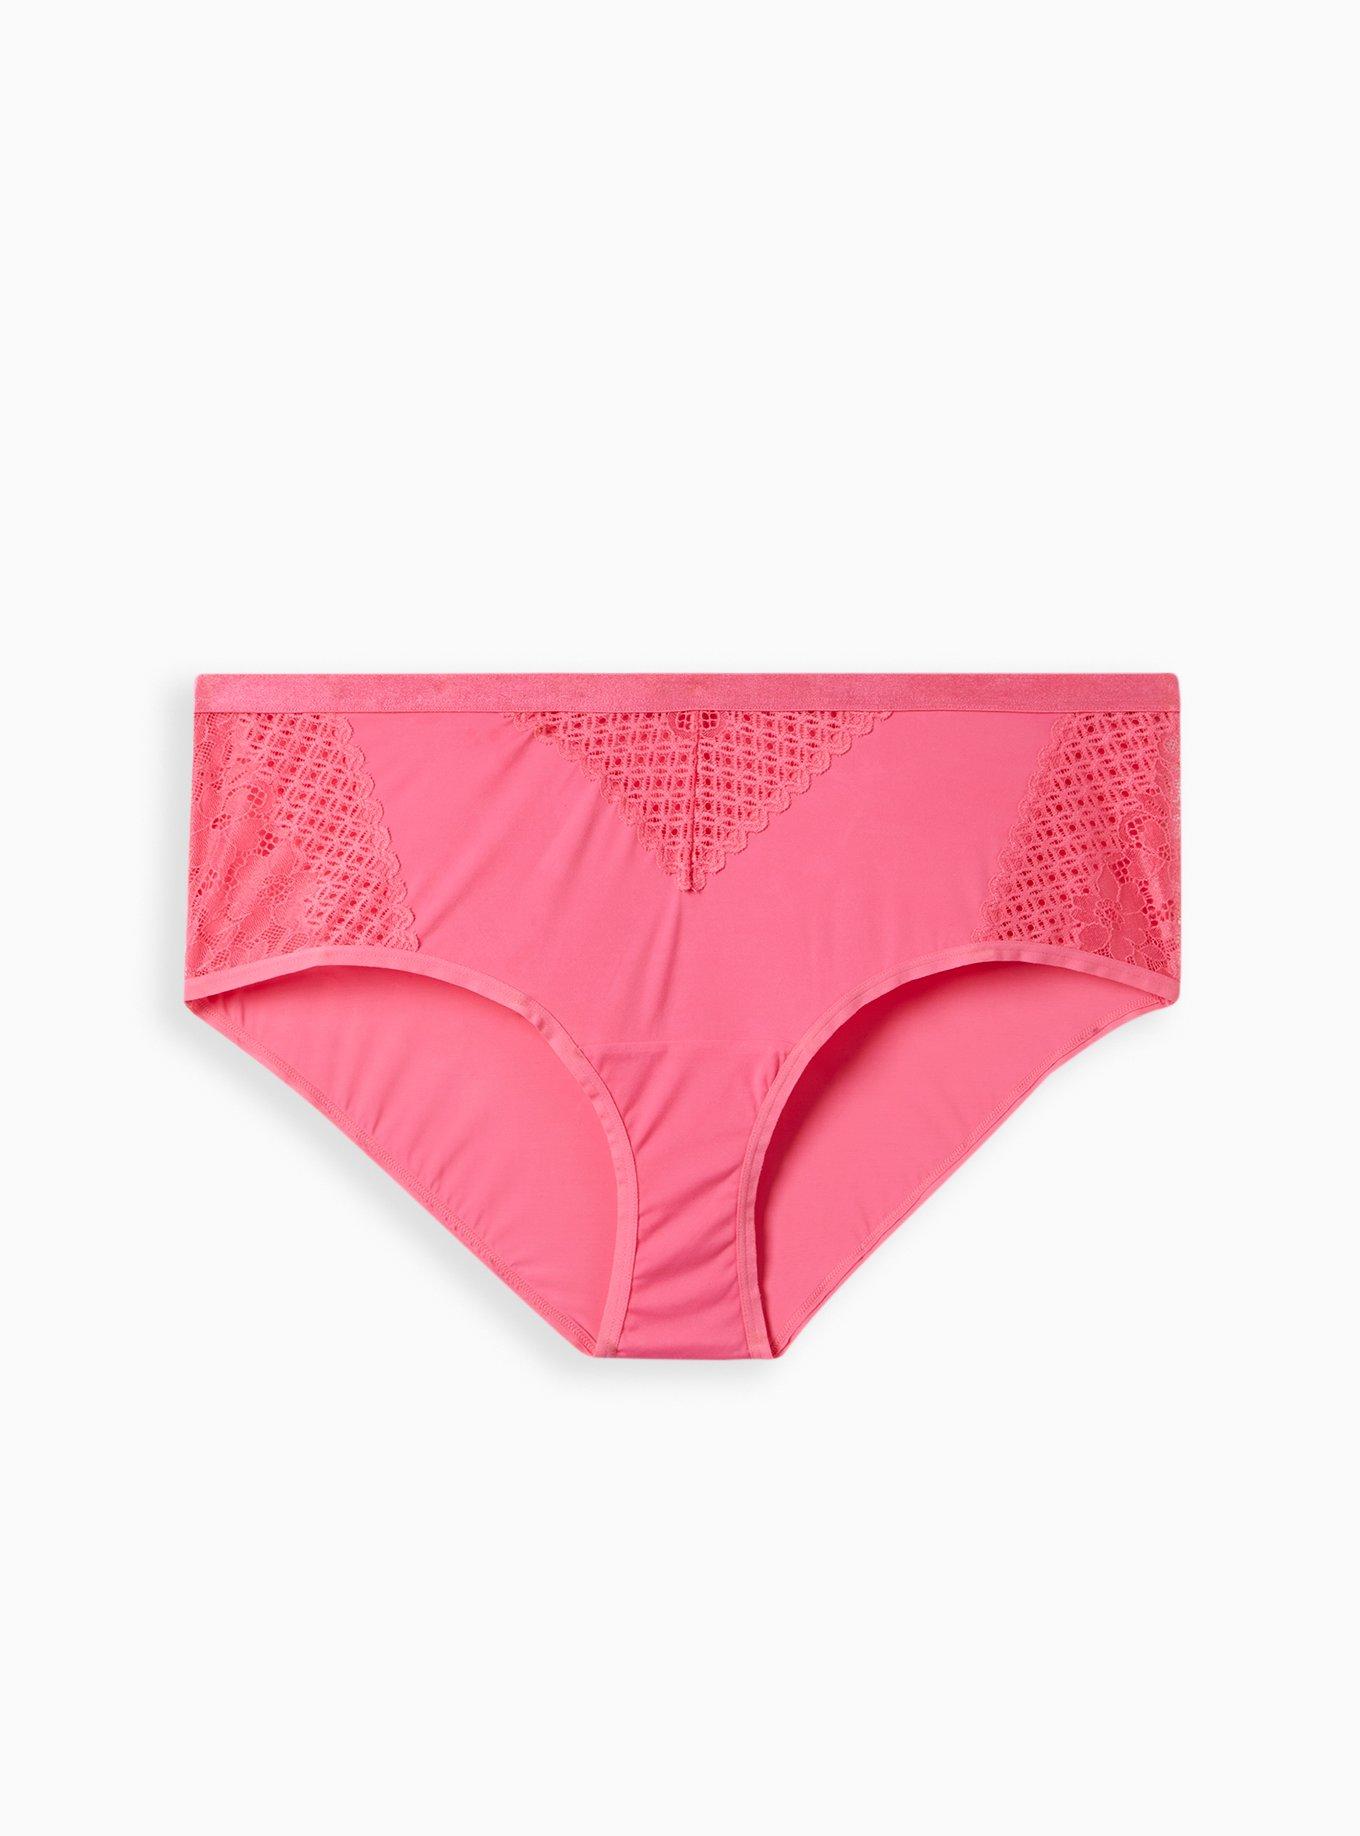 Plus Size - Cheeky Panty - Microfiber & Lace Pink - Torrid